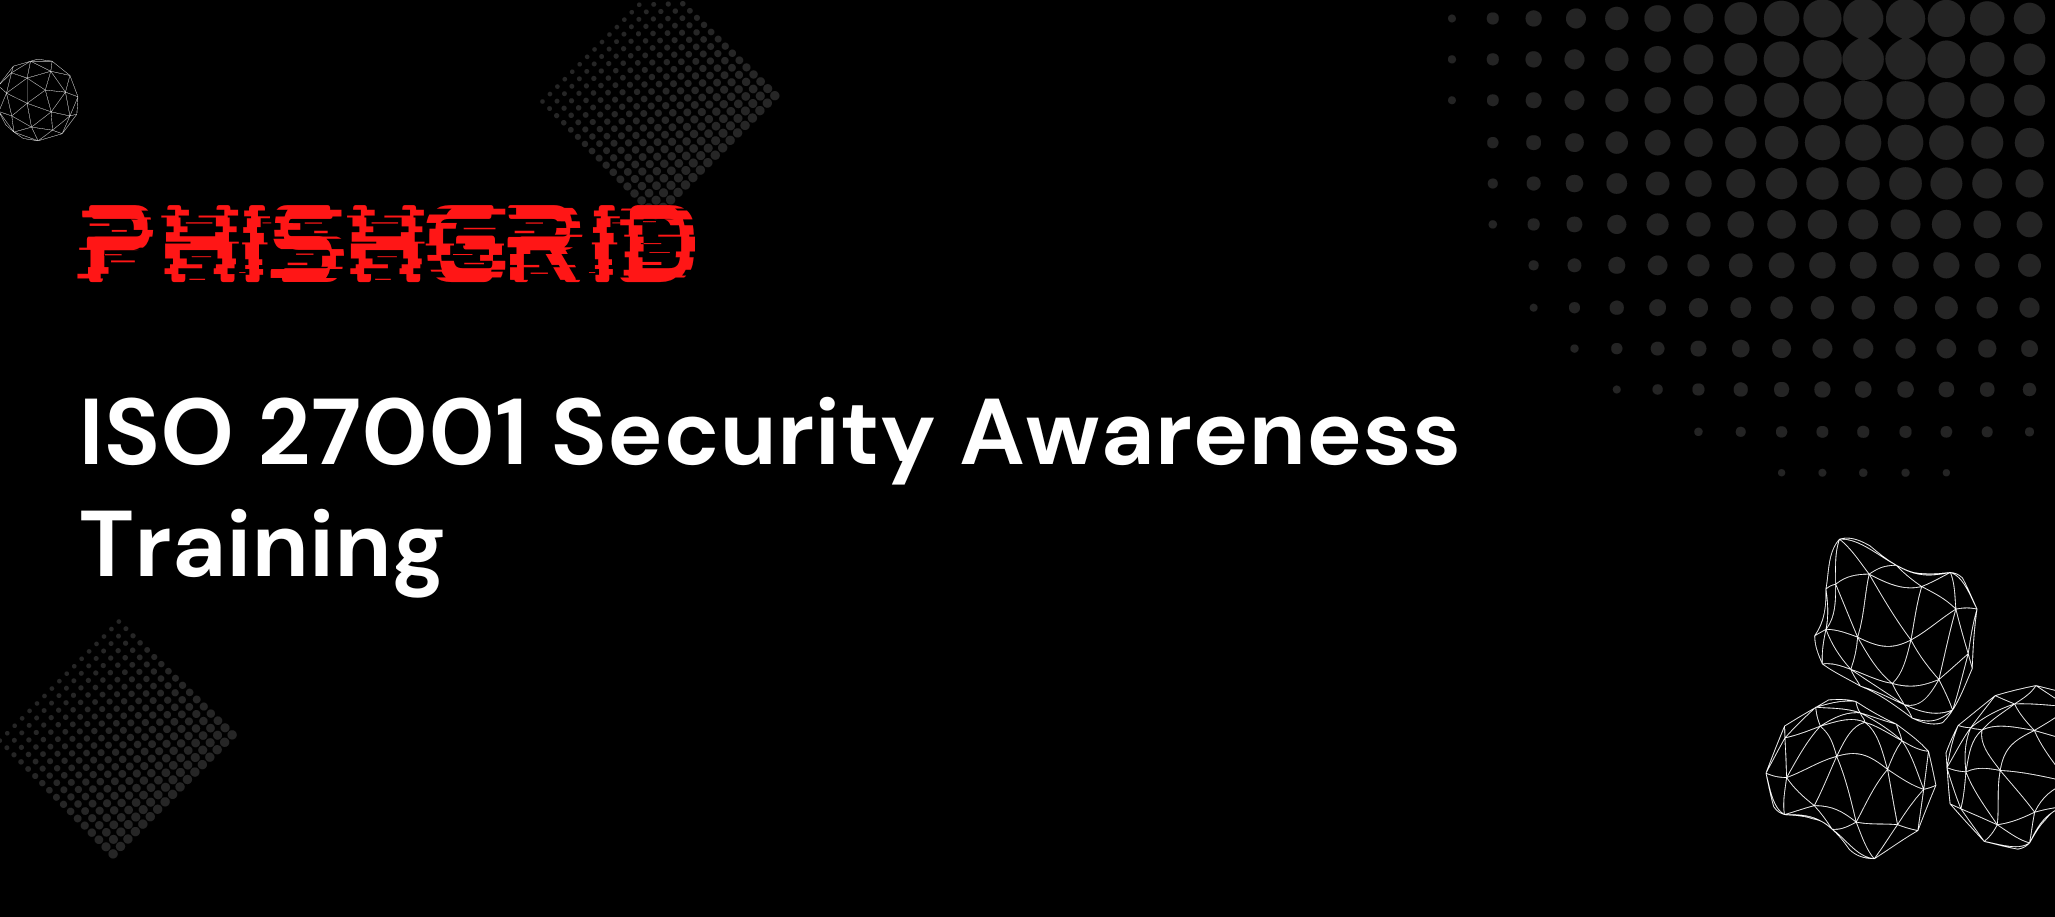 ISO 27001 Security Awareness Training